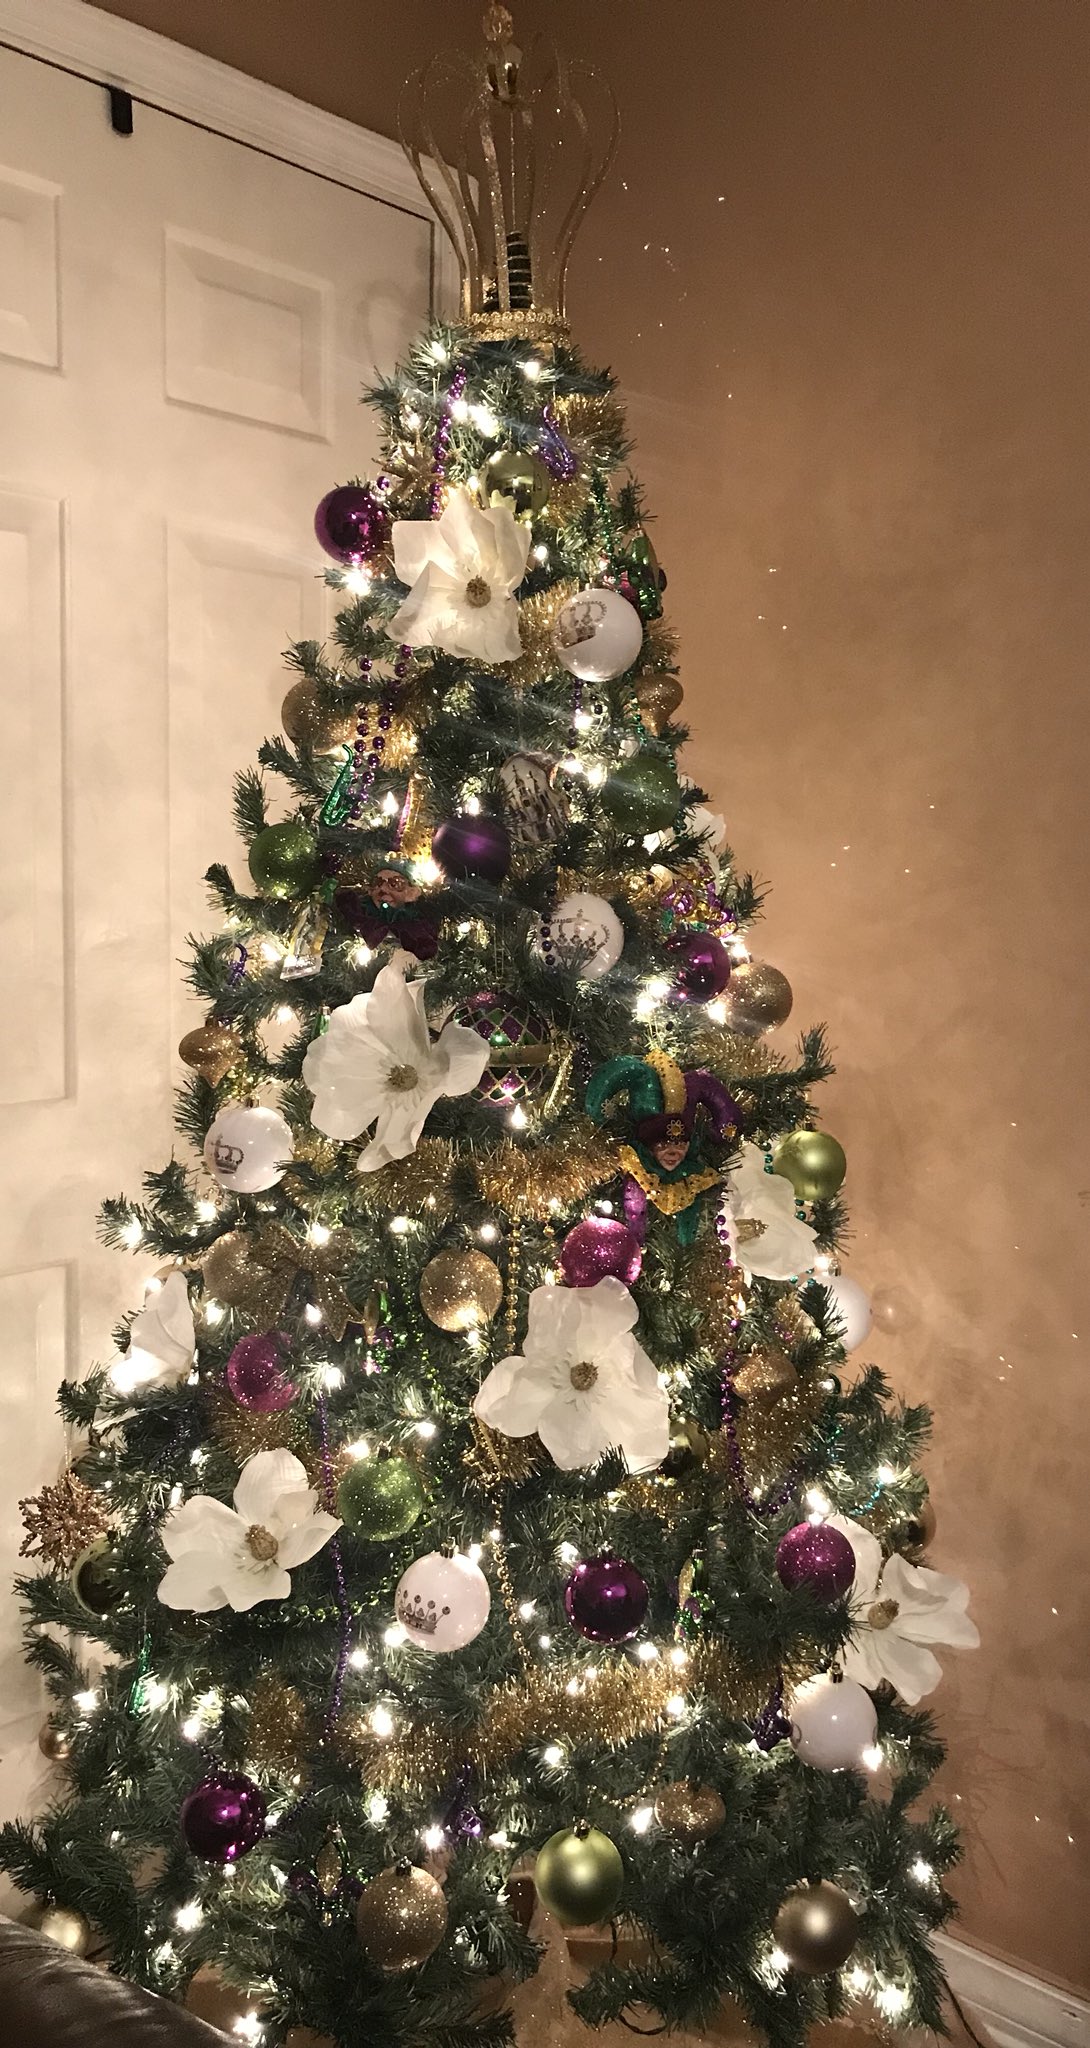 Turn that Christmas tree into a Mardi Gras tree